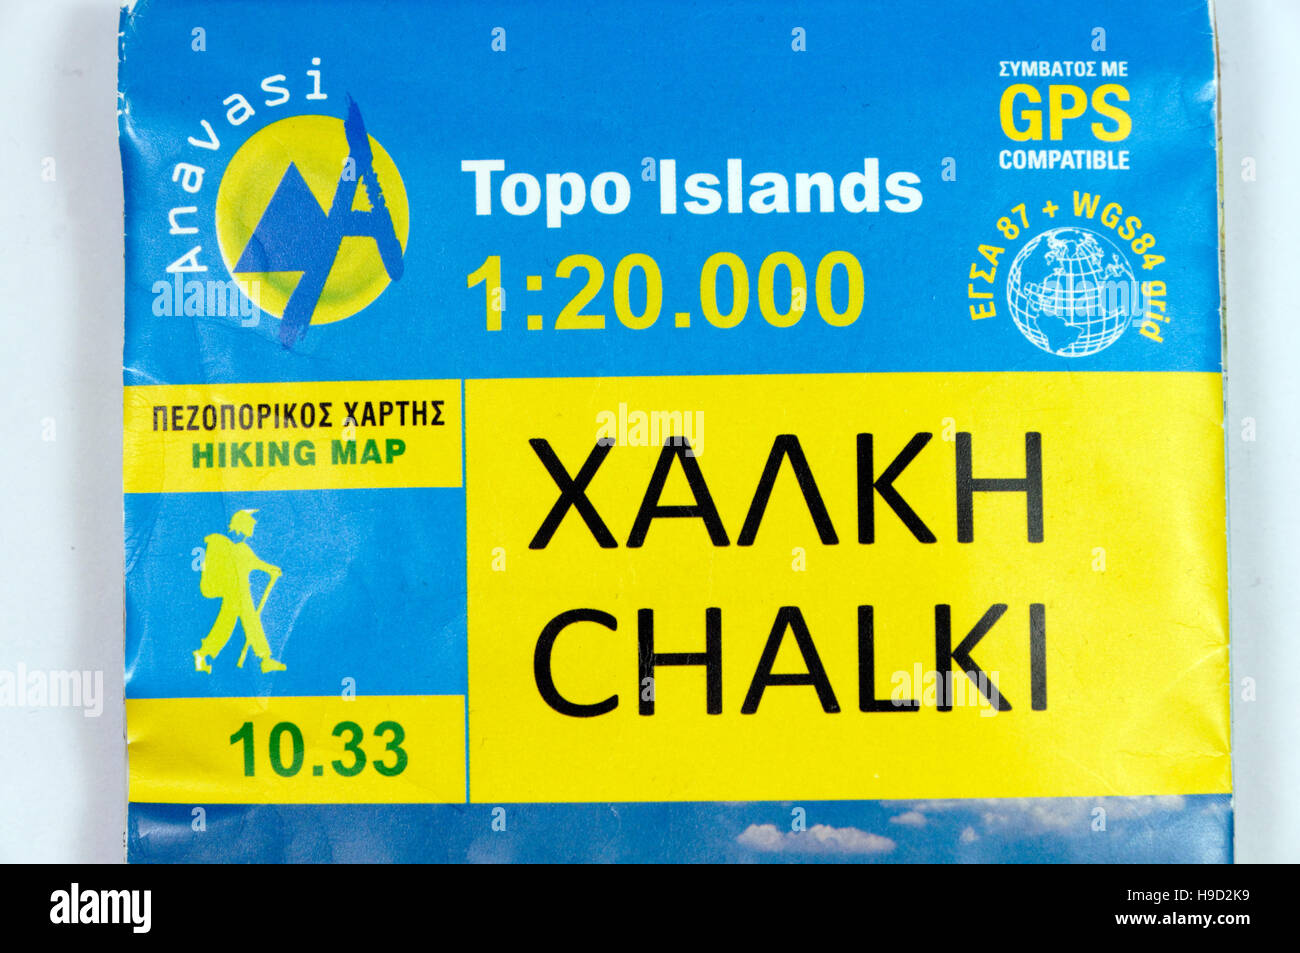 Topo Islands map of the Greek Island of Chalki. Stock Photo